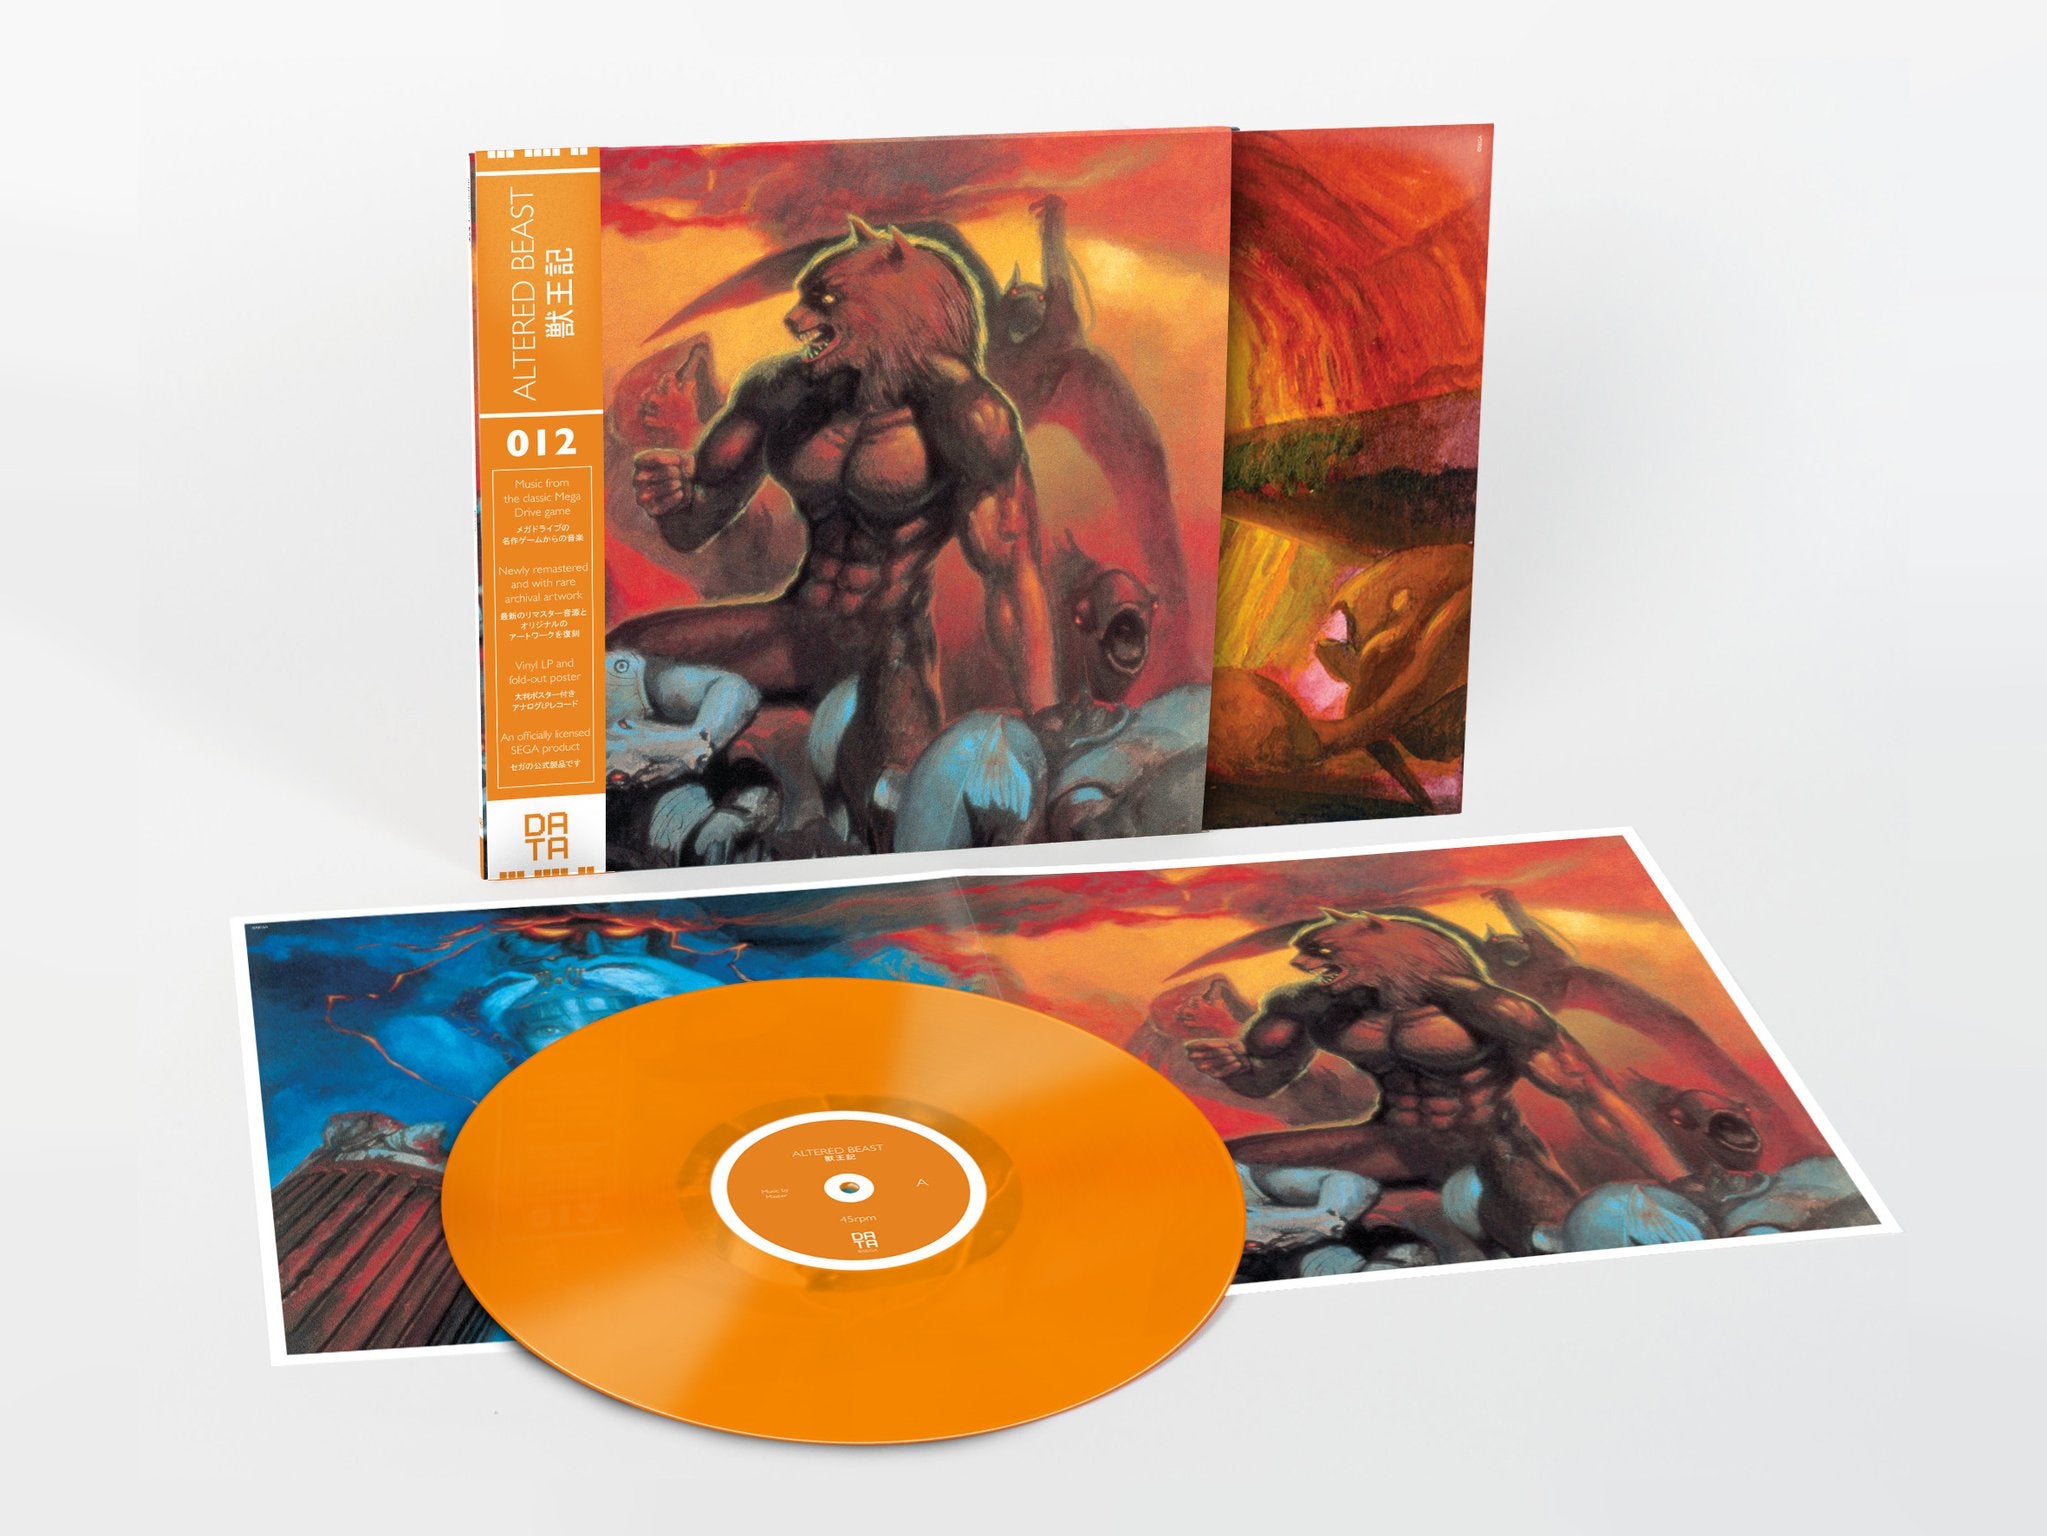 Altered Beast Soundtrack LP